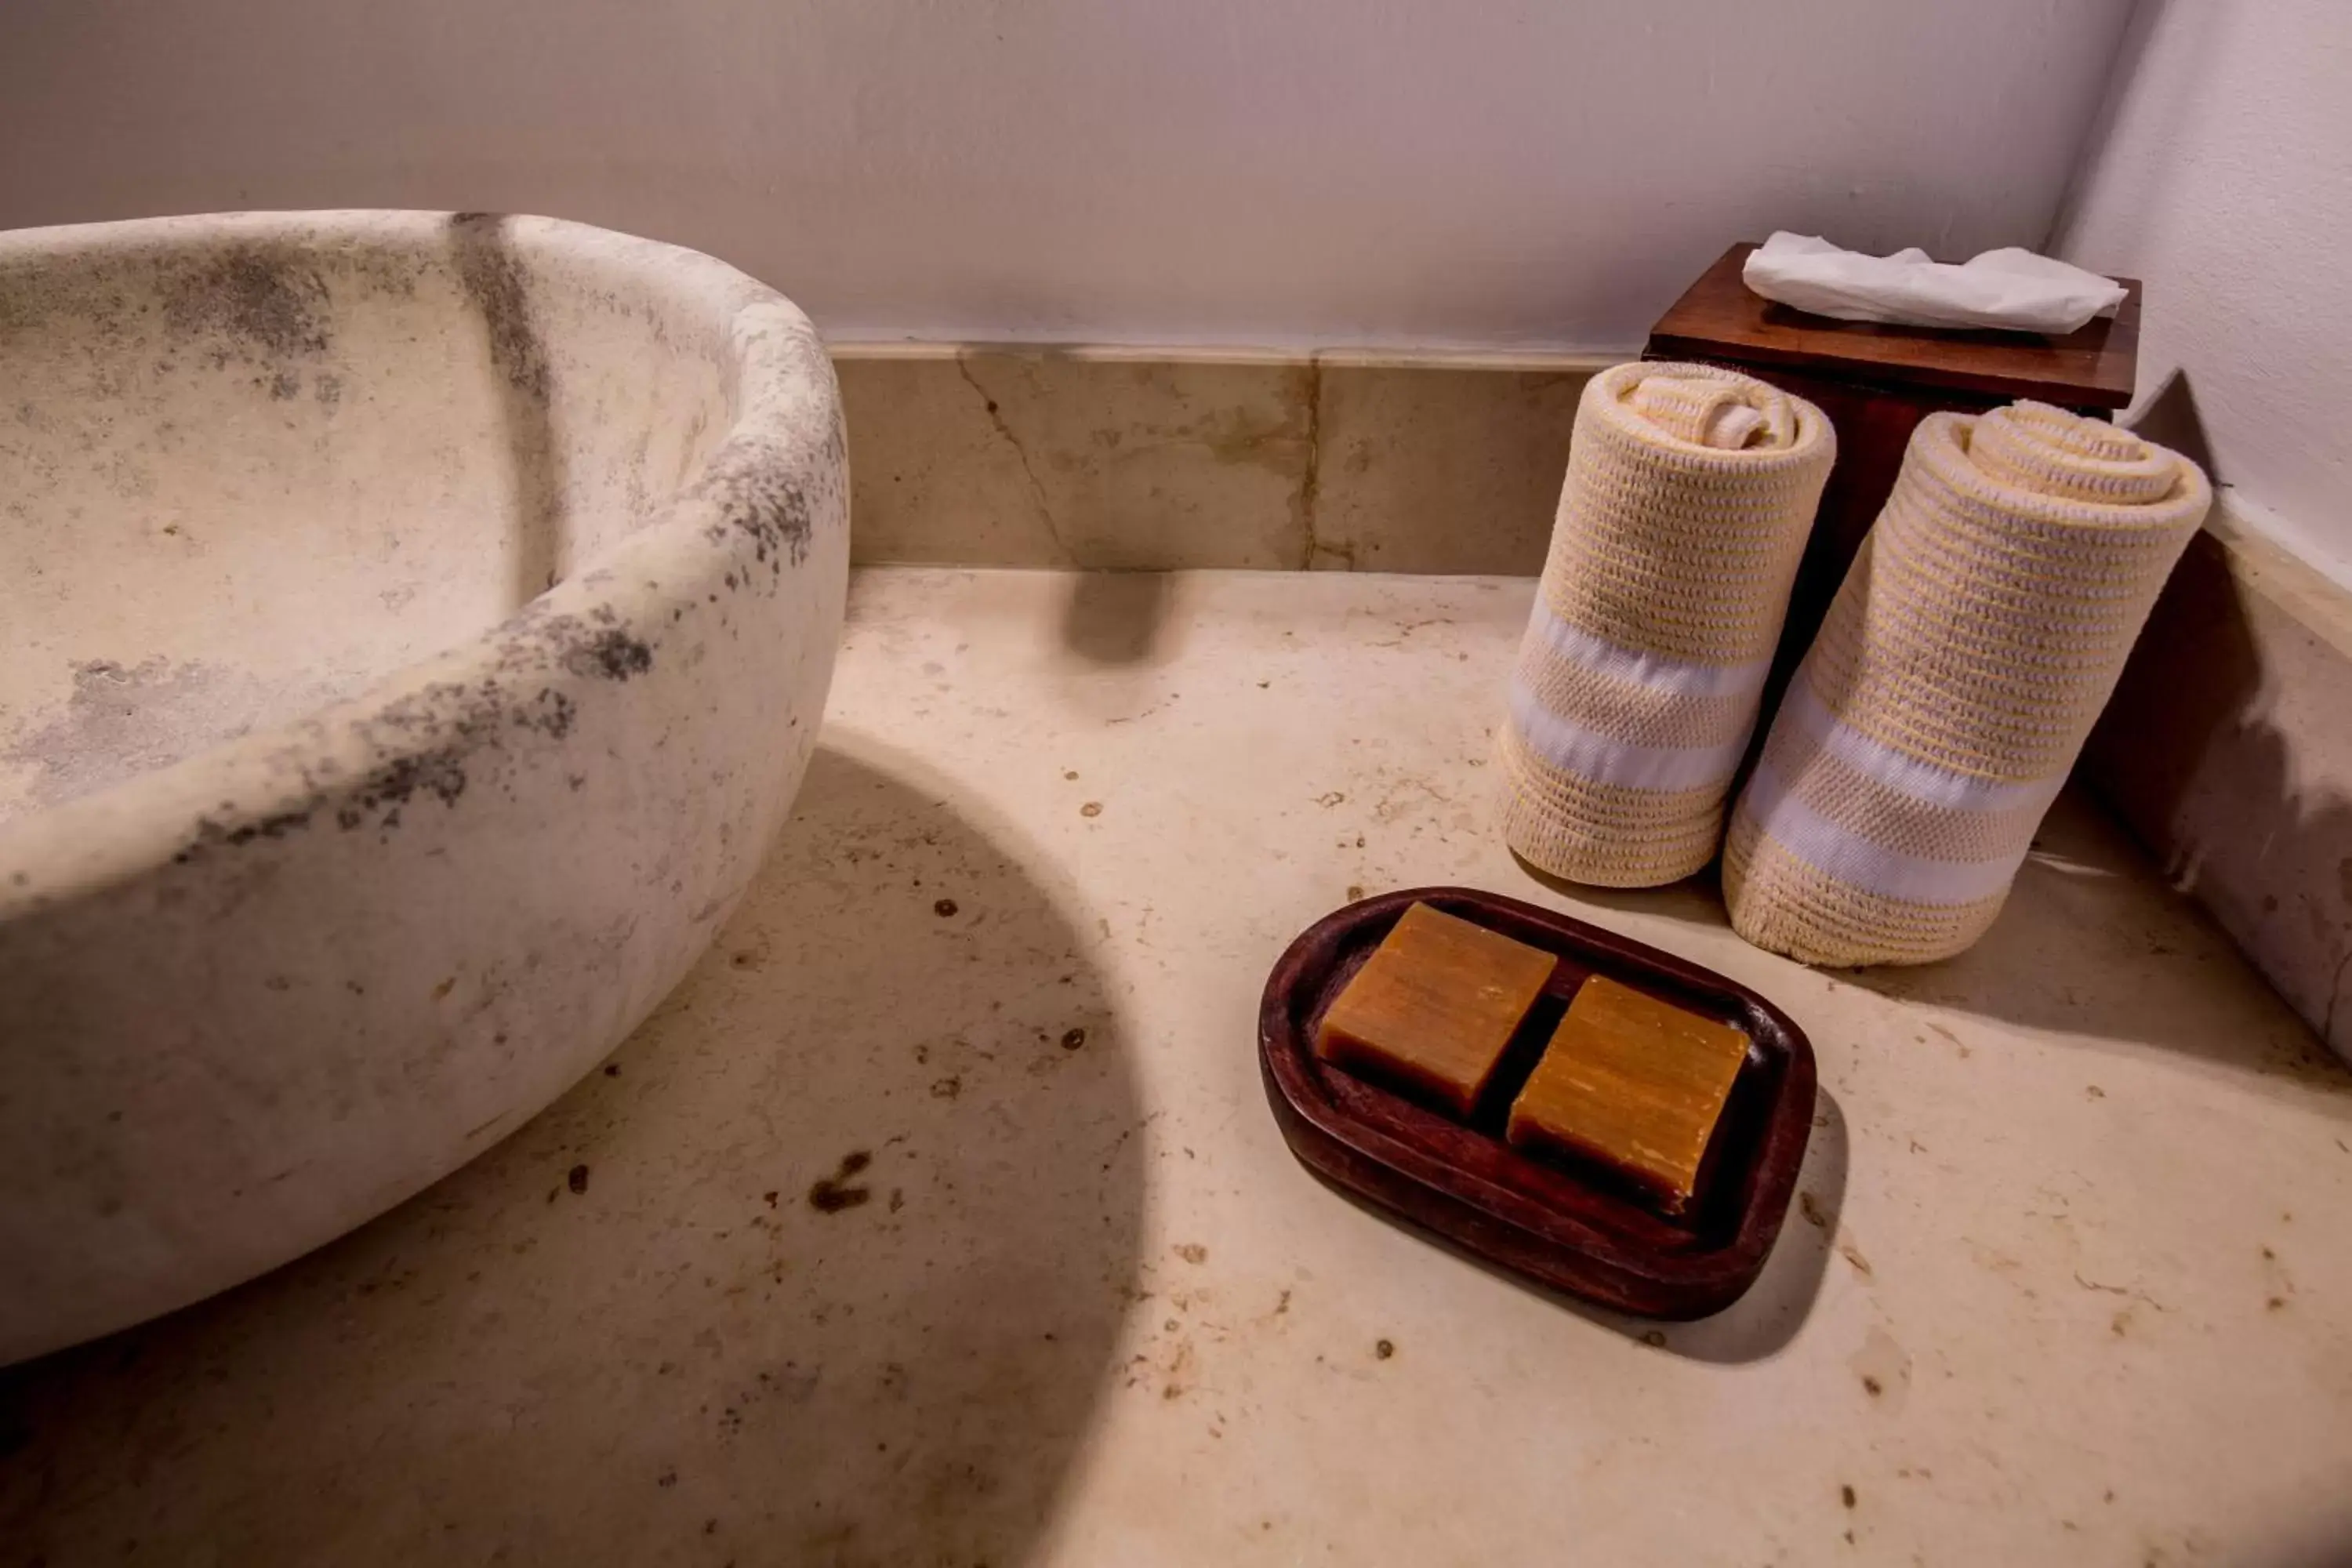 Bathroom in Ana y Jose Hotel & Spa Tulum - All inclusive